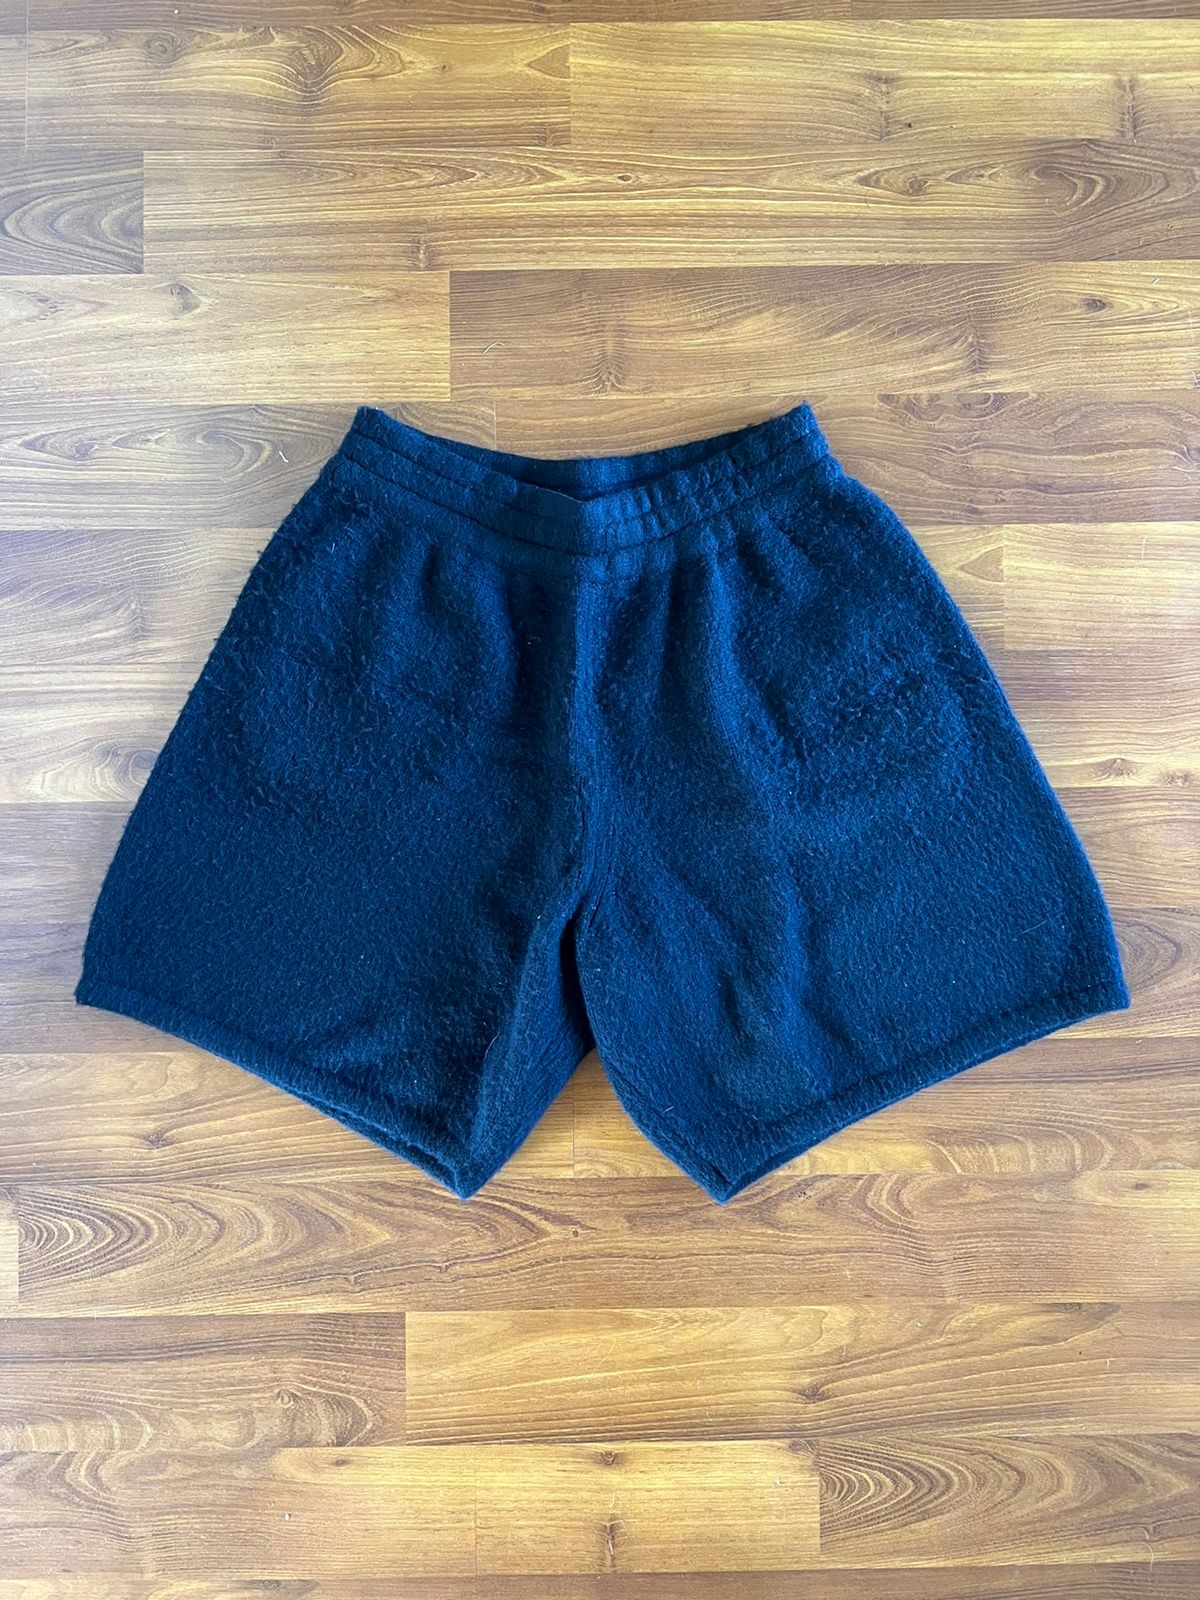 Cole Buxton Cole Buxton Black Knit Shorts Large | Grailed